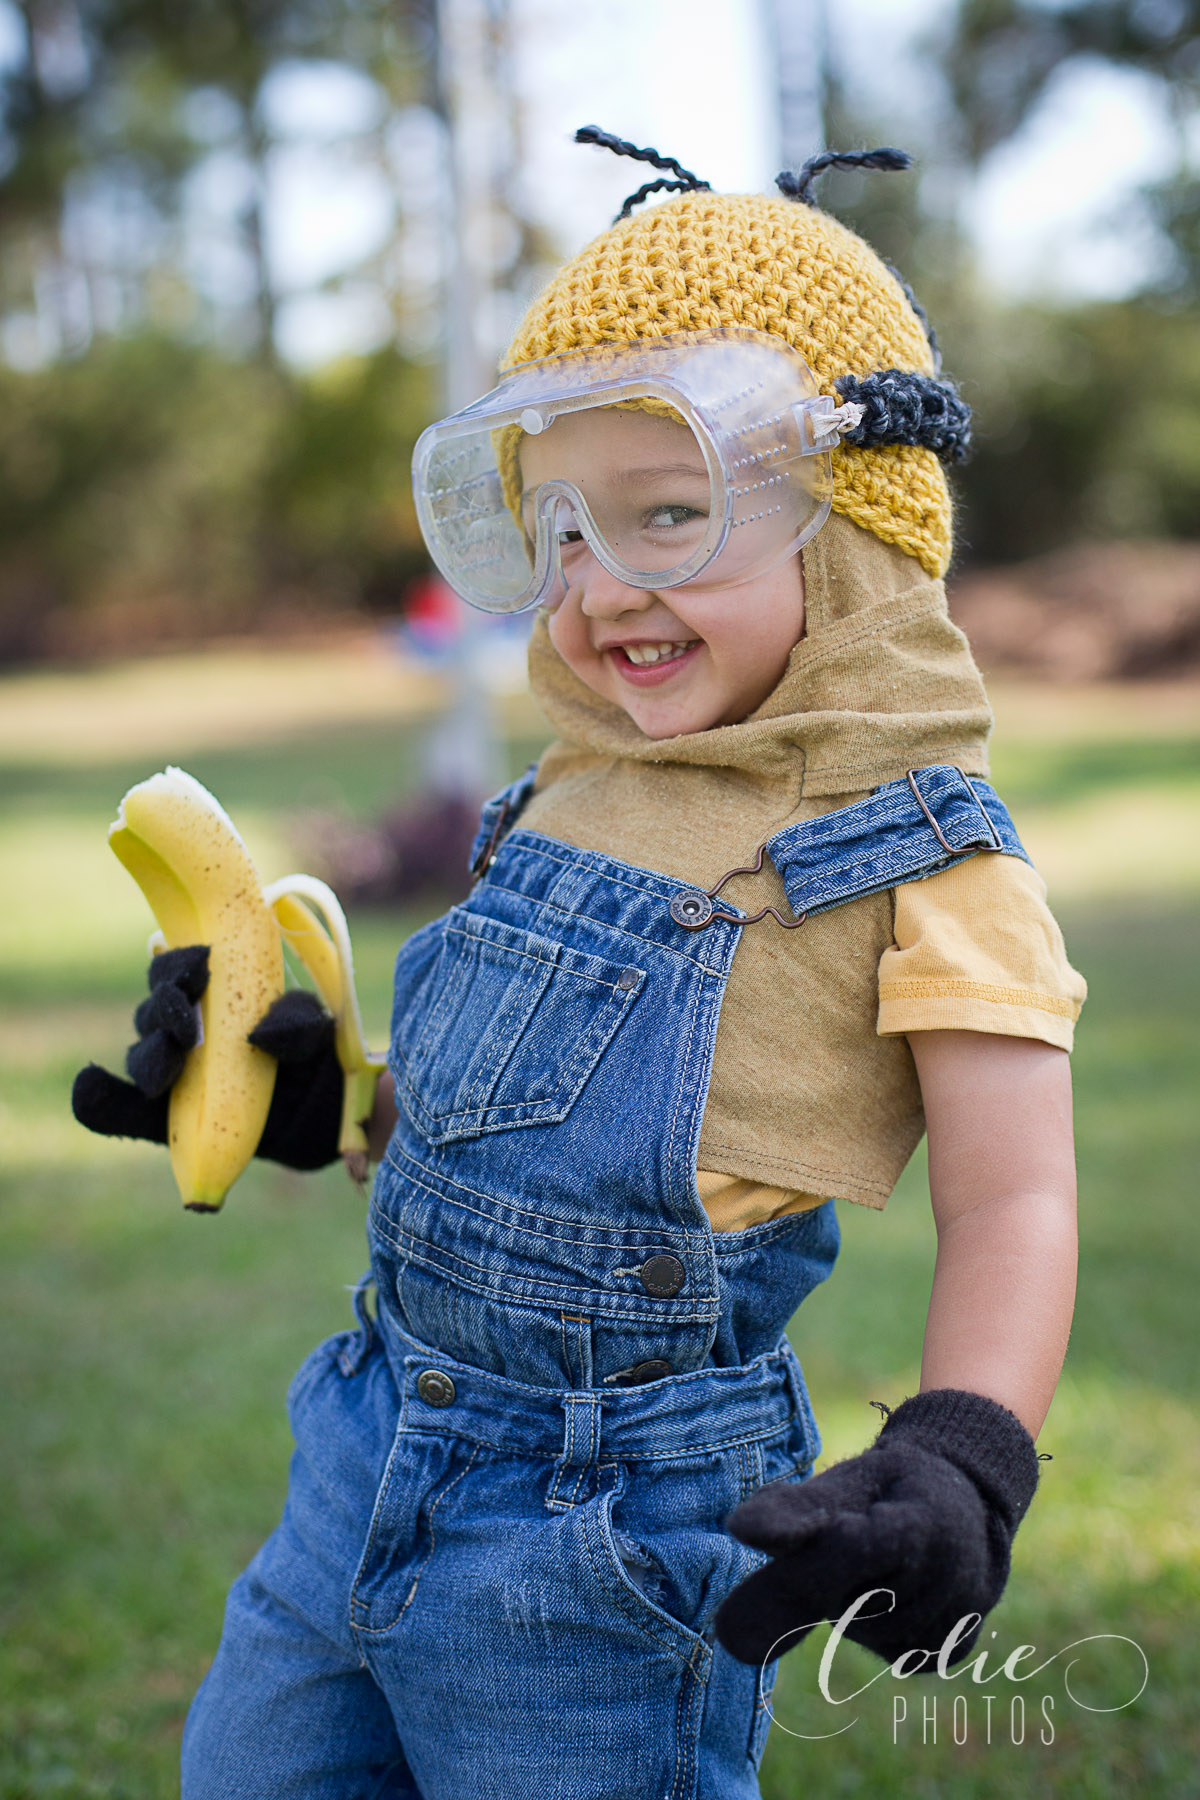 Halloween costume minion banana